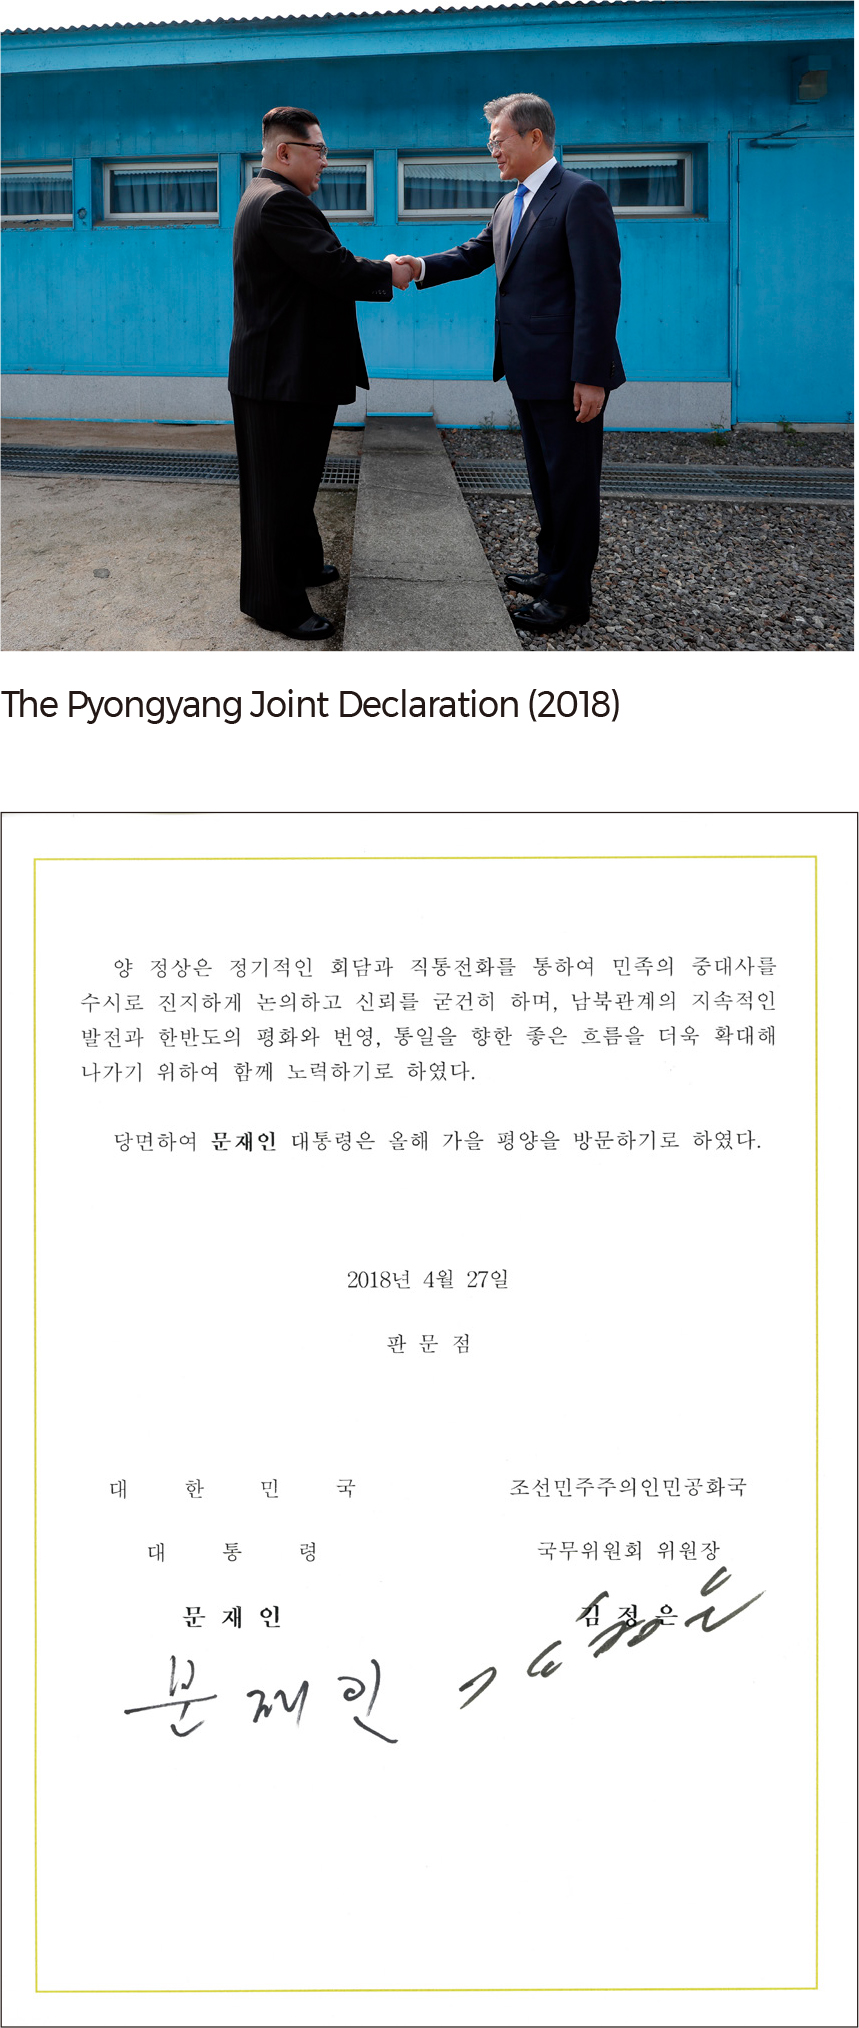 The Pyongyang Joint Declaration (2018)